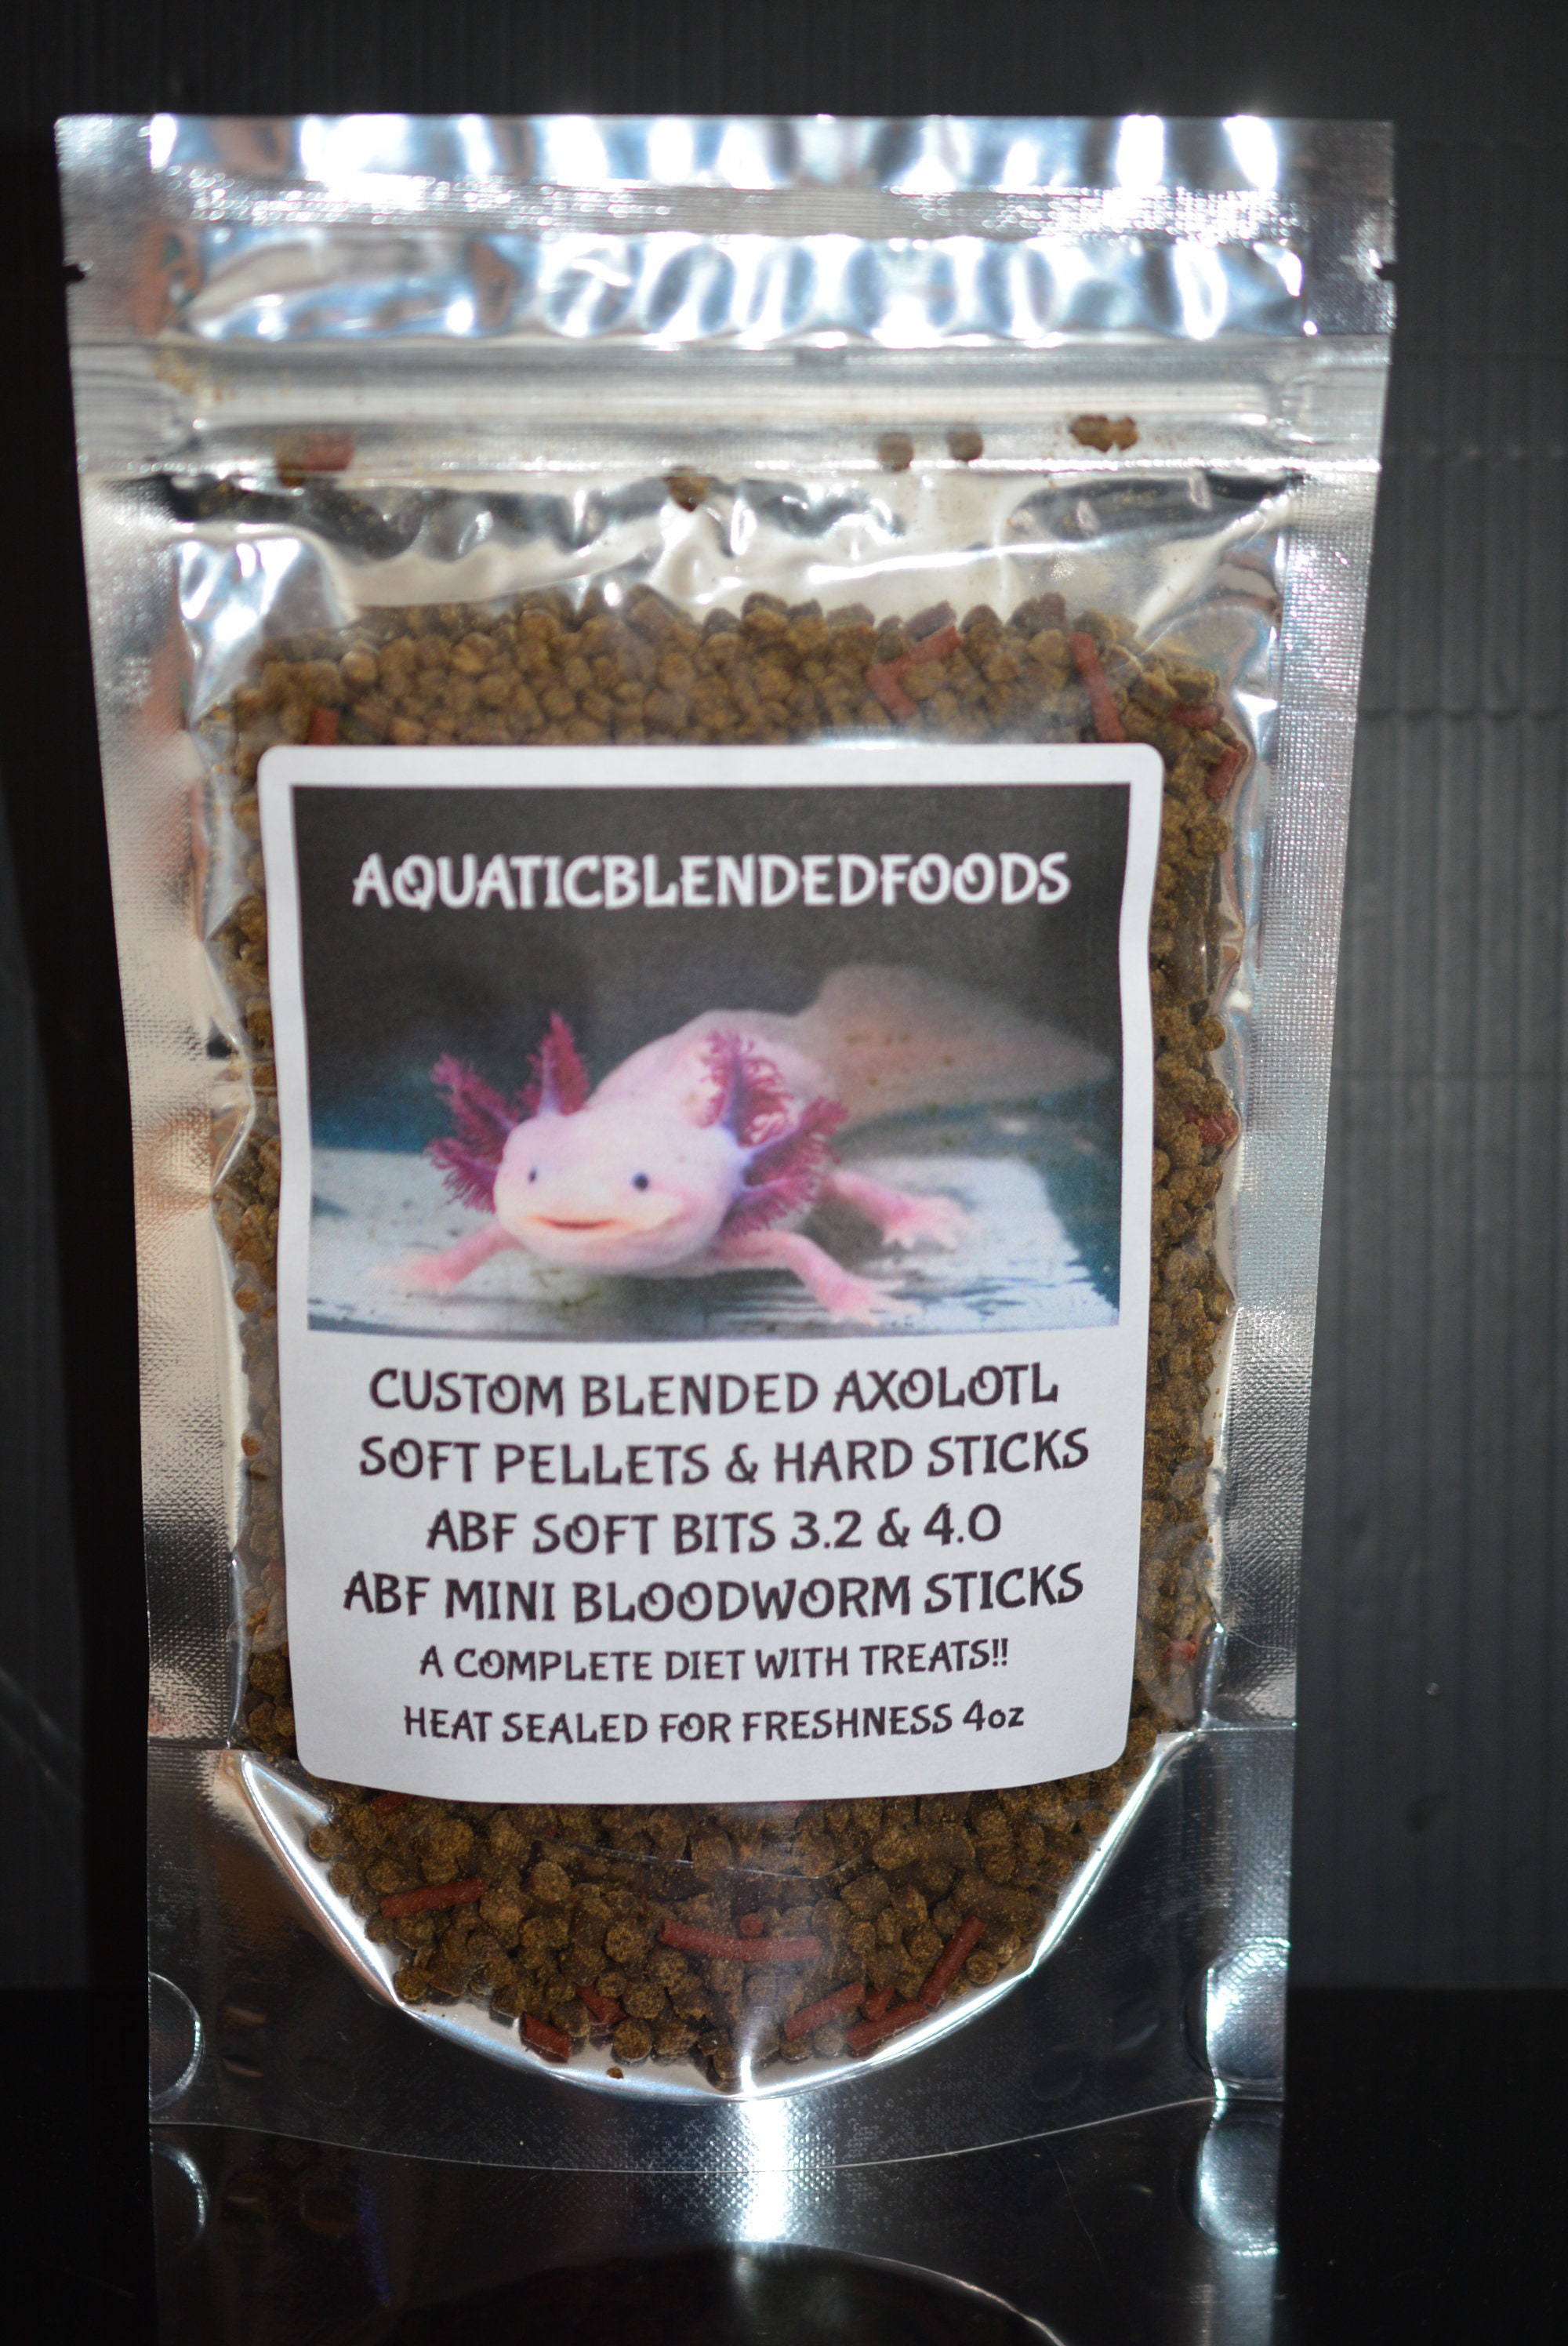 ABF AXOLOTL FOOD Mix, Soft Bits & Bloodworm,Earthworm Mini Sticks, Krill  bits,ABF284 Free Axolotl Gift with Purchase -  France